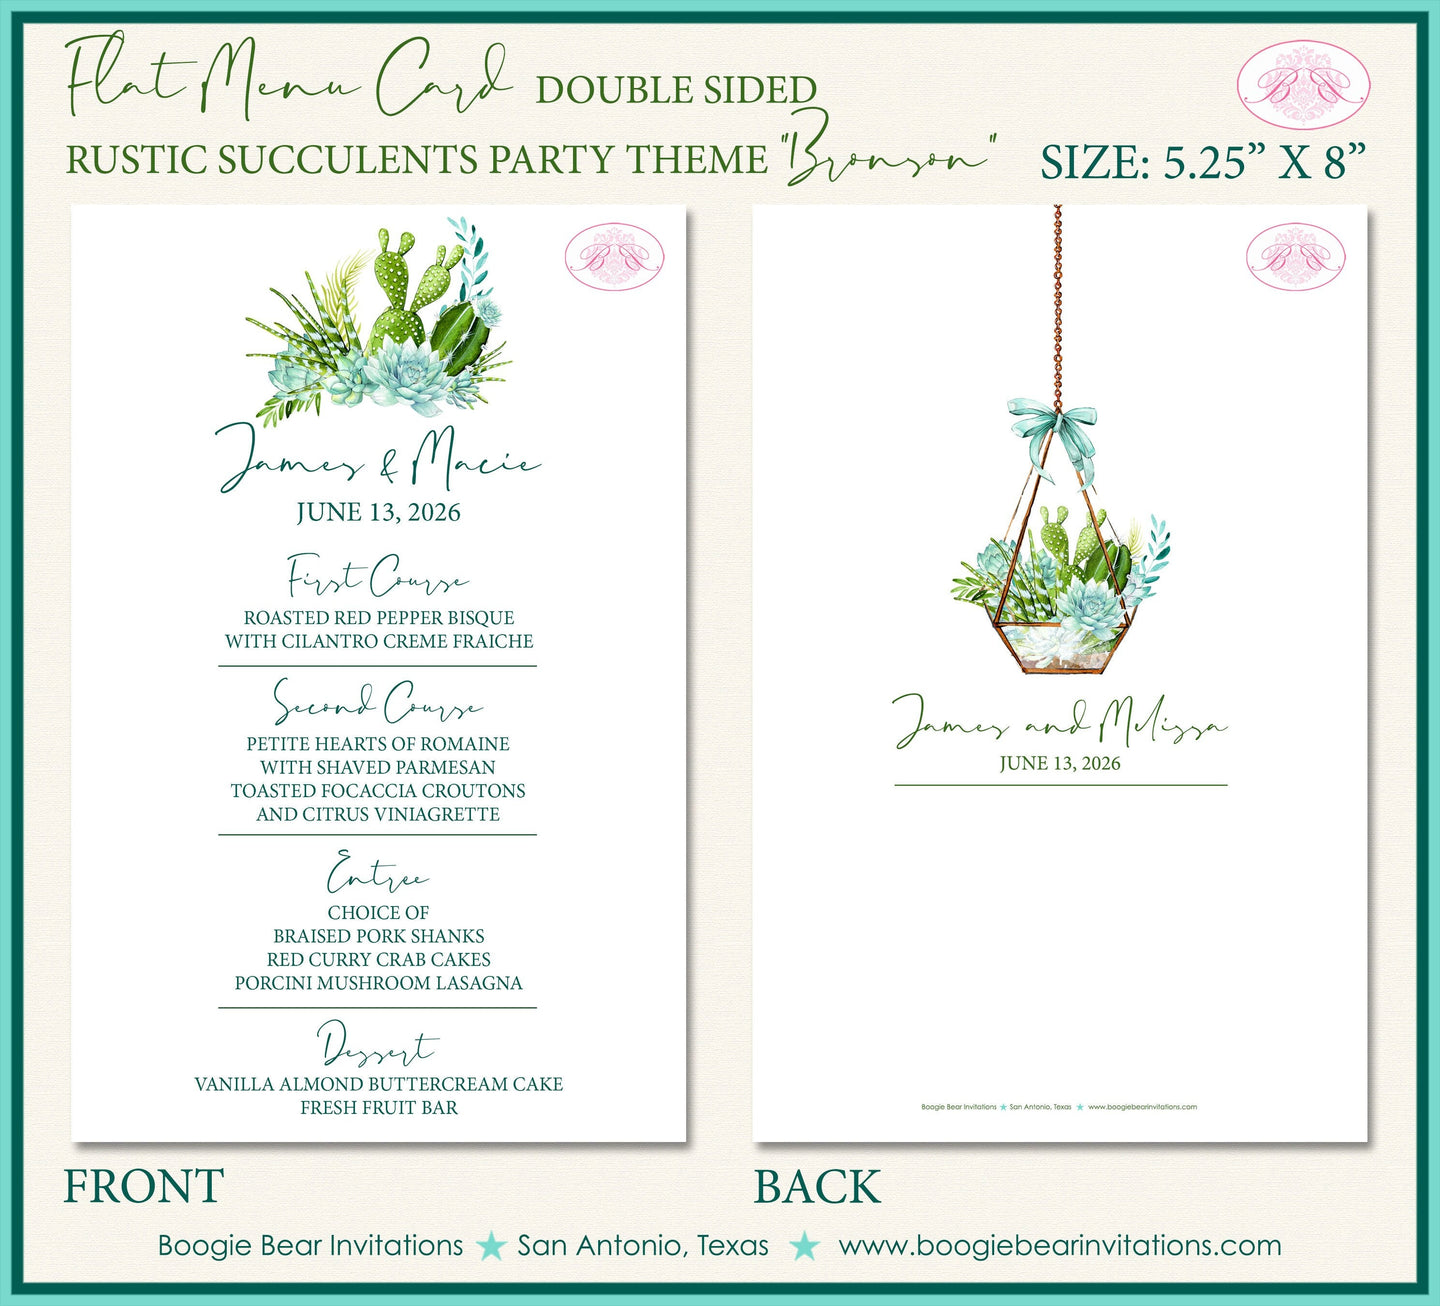 Rustic Succulents Wedding Menu Cards Party Food Entree Plate Dinner Desert Cactus Boogie Bear Invitations Bronson Theme Paperless Printed